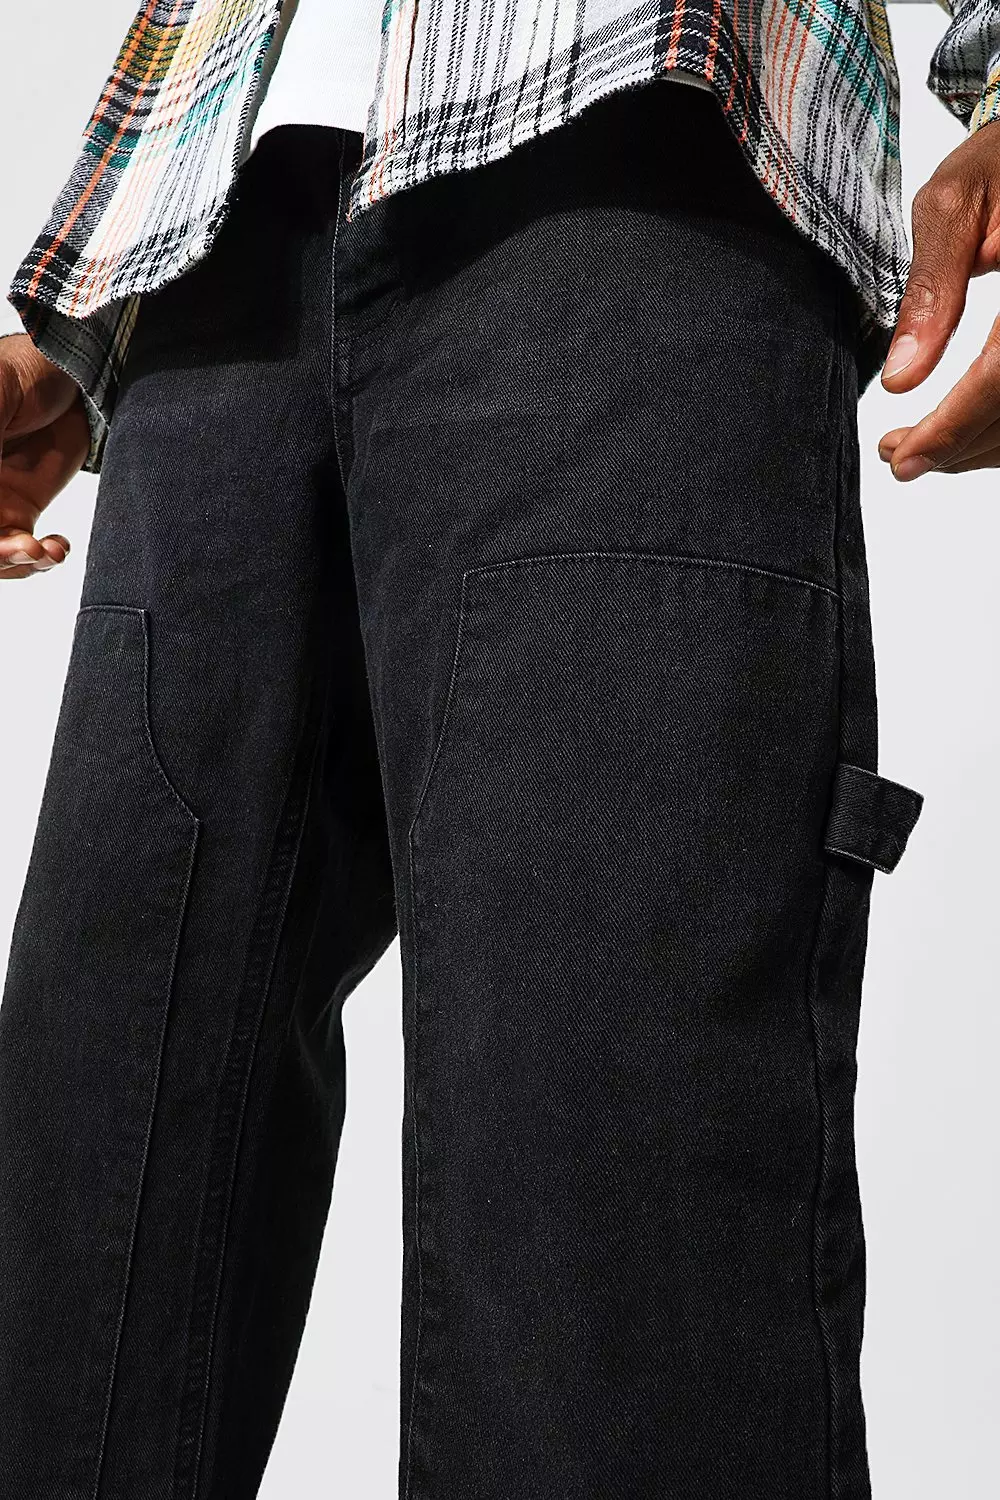 Dickies Men's Relaxed Fit Straight Leg Rigid Carpenter Jeans